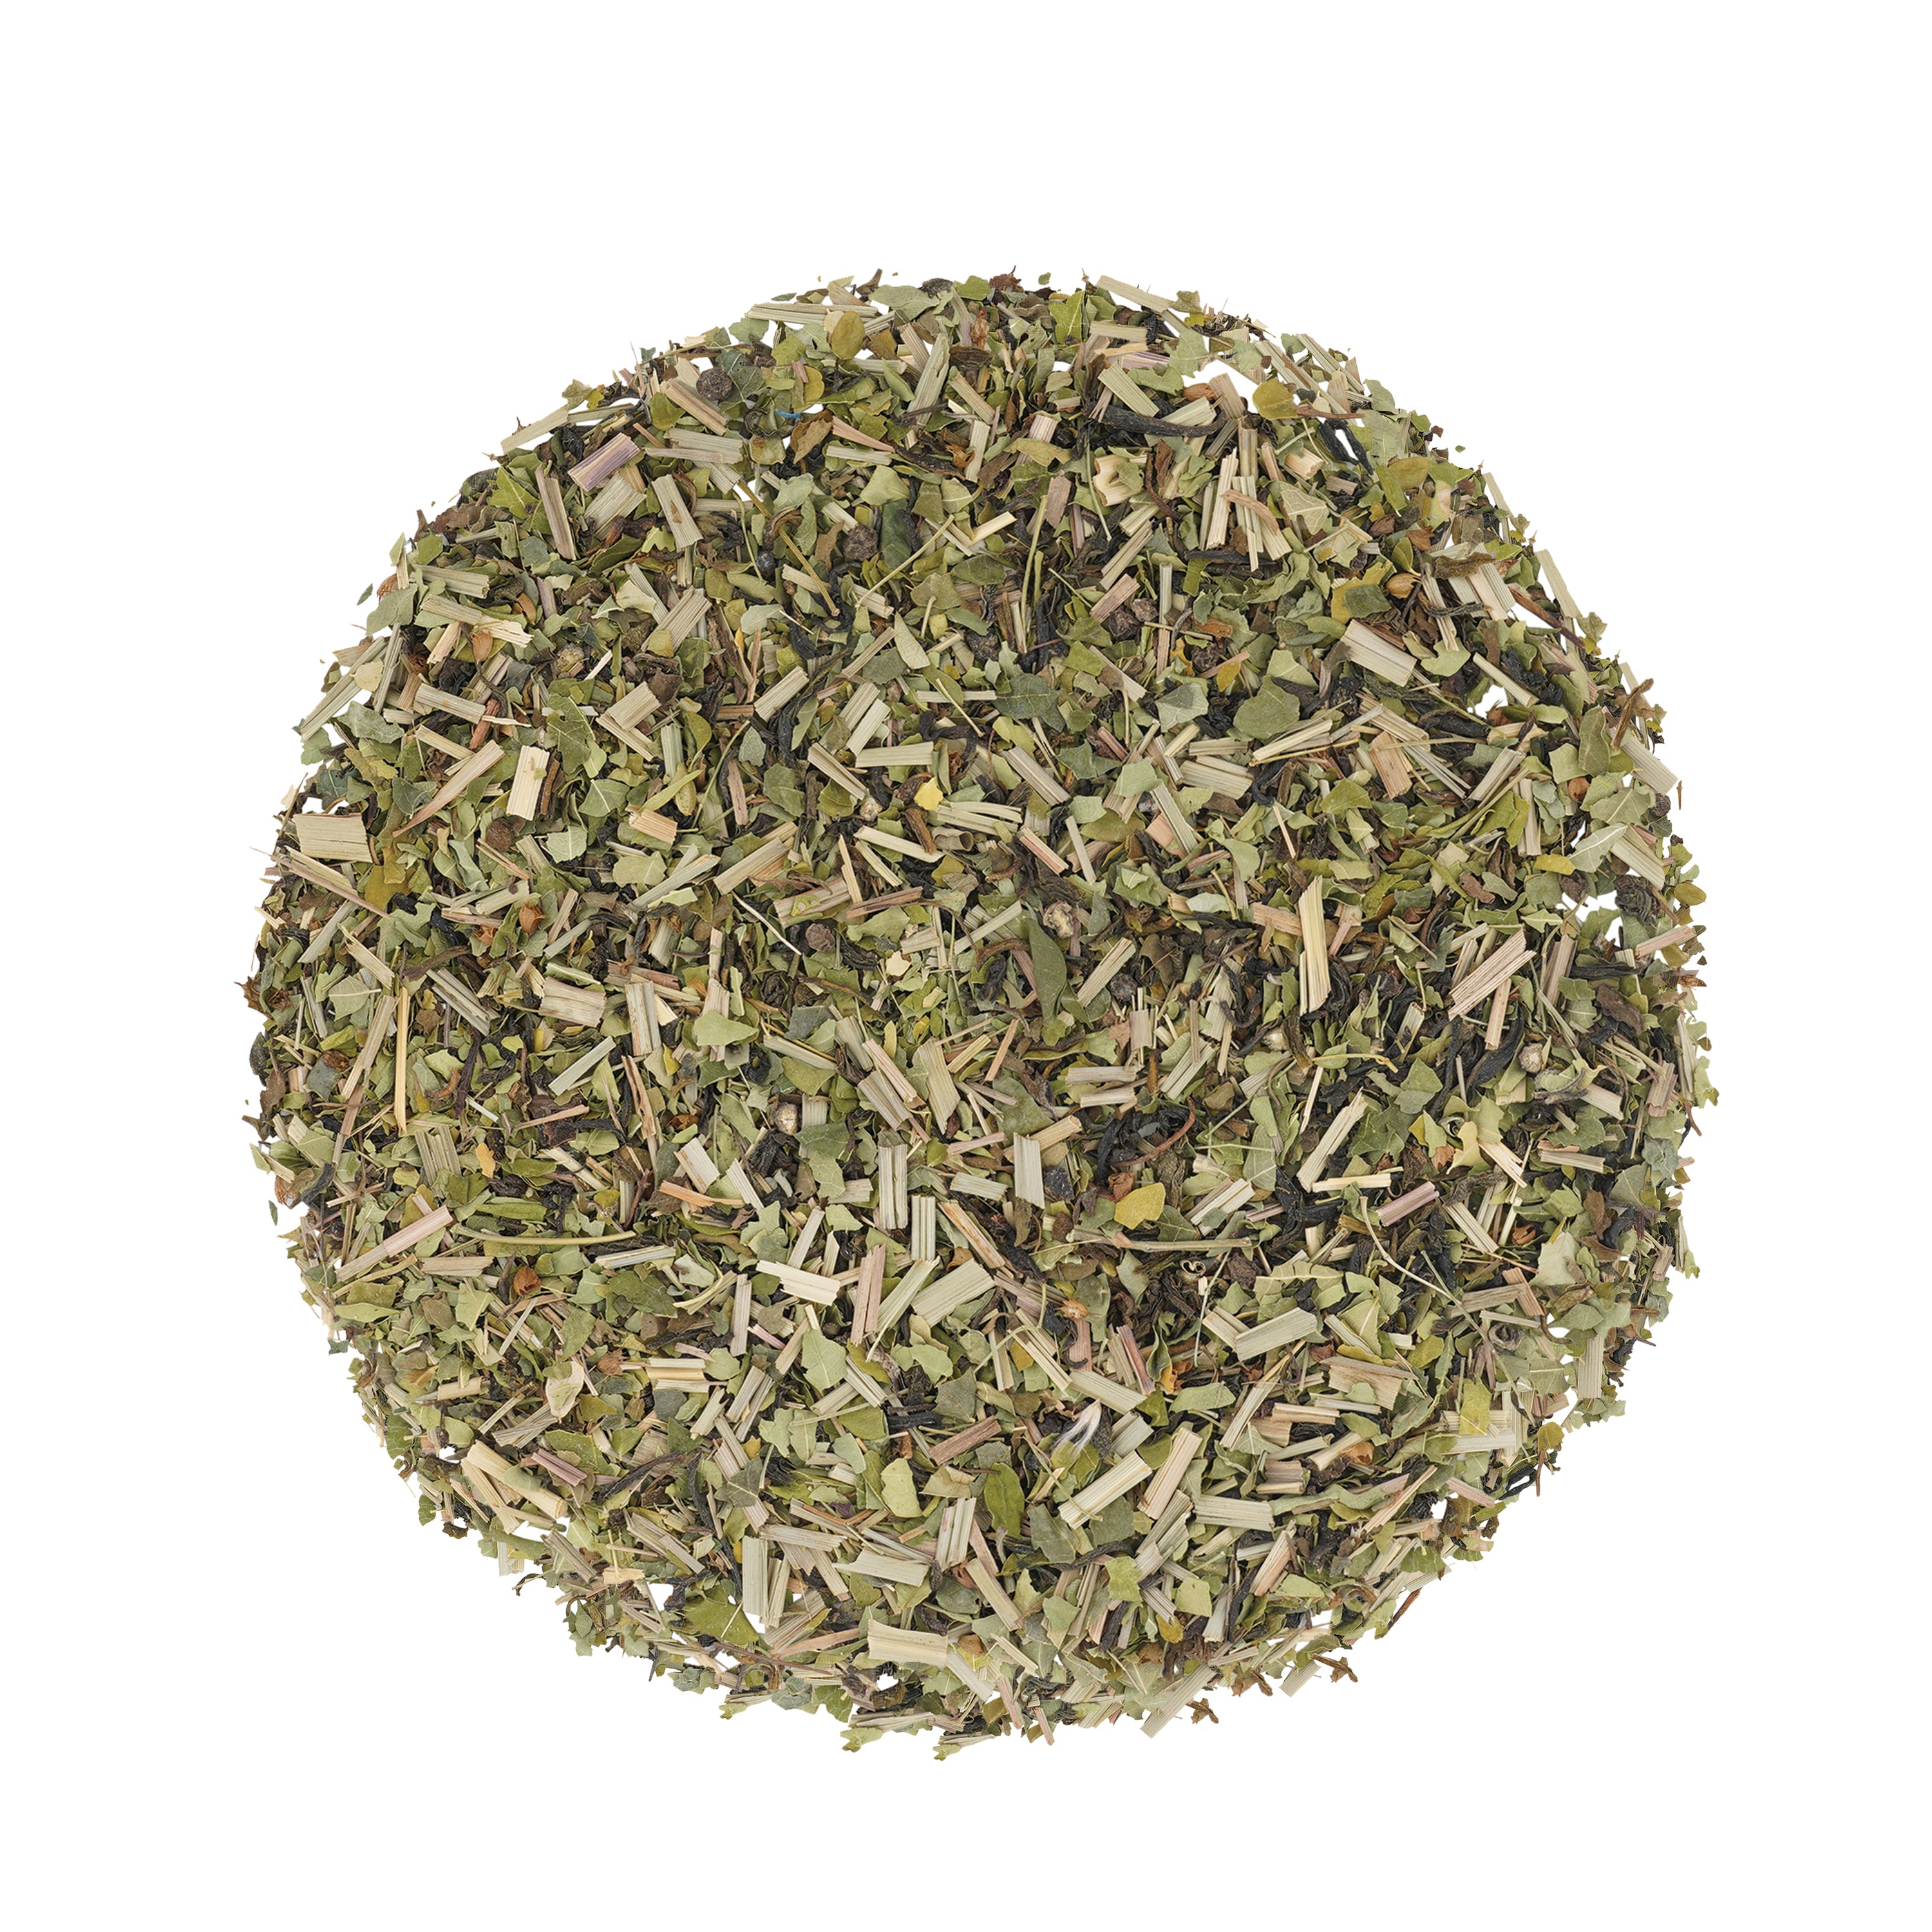 Moringa Tulsi Green Tea - 20 Tea Bags